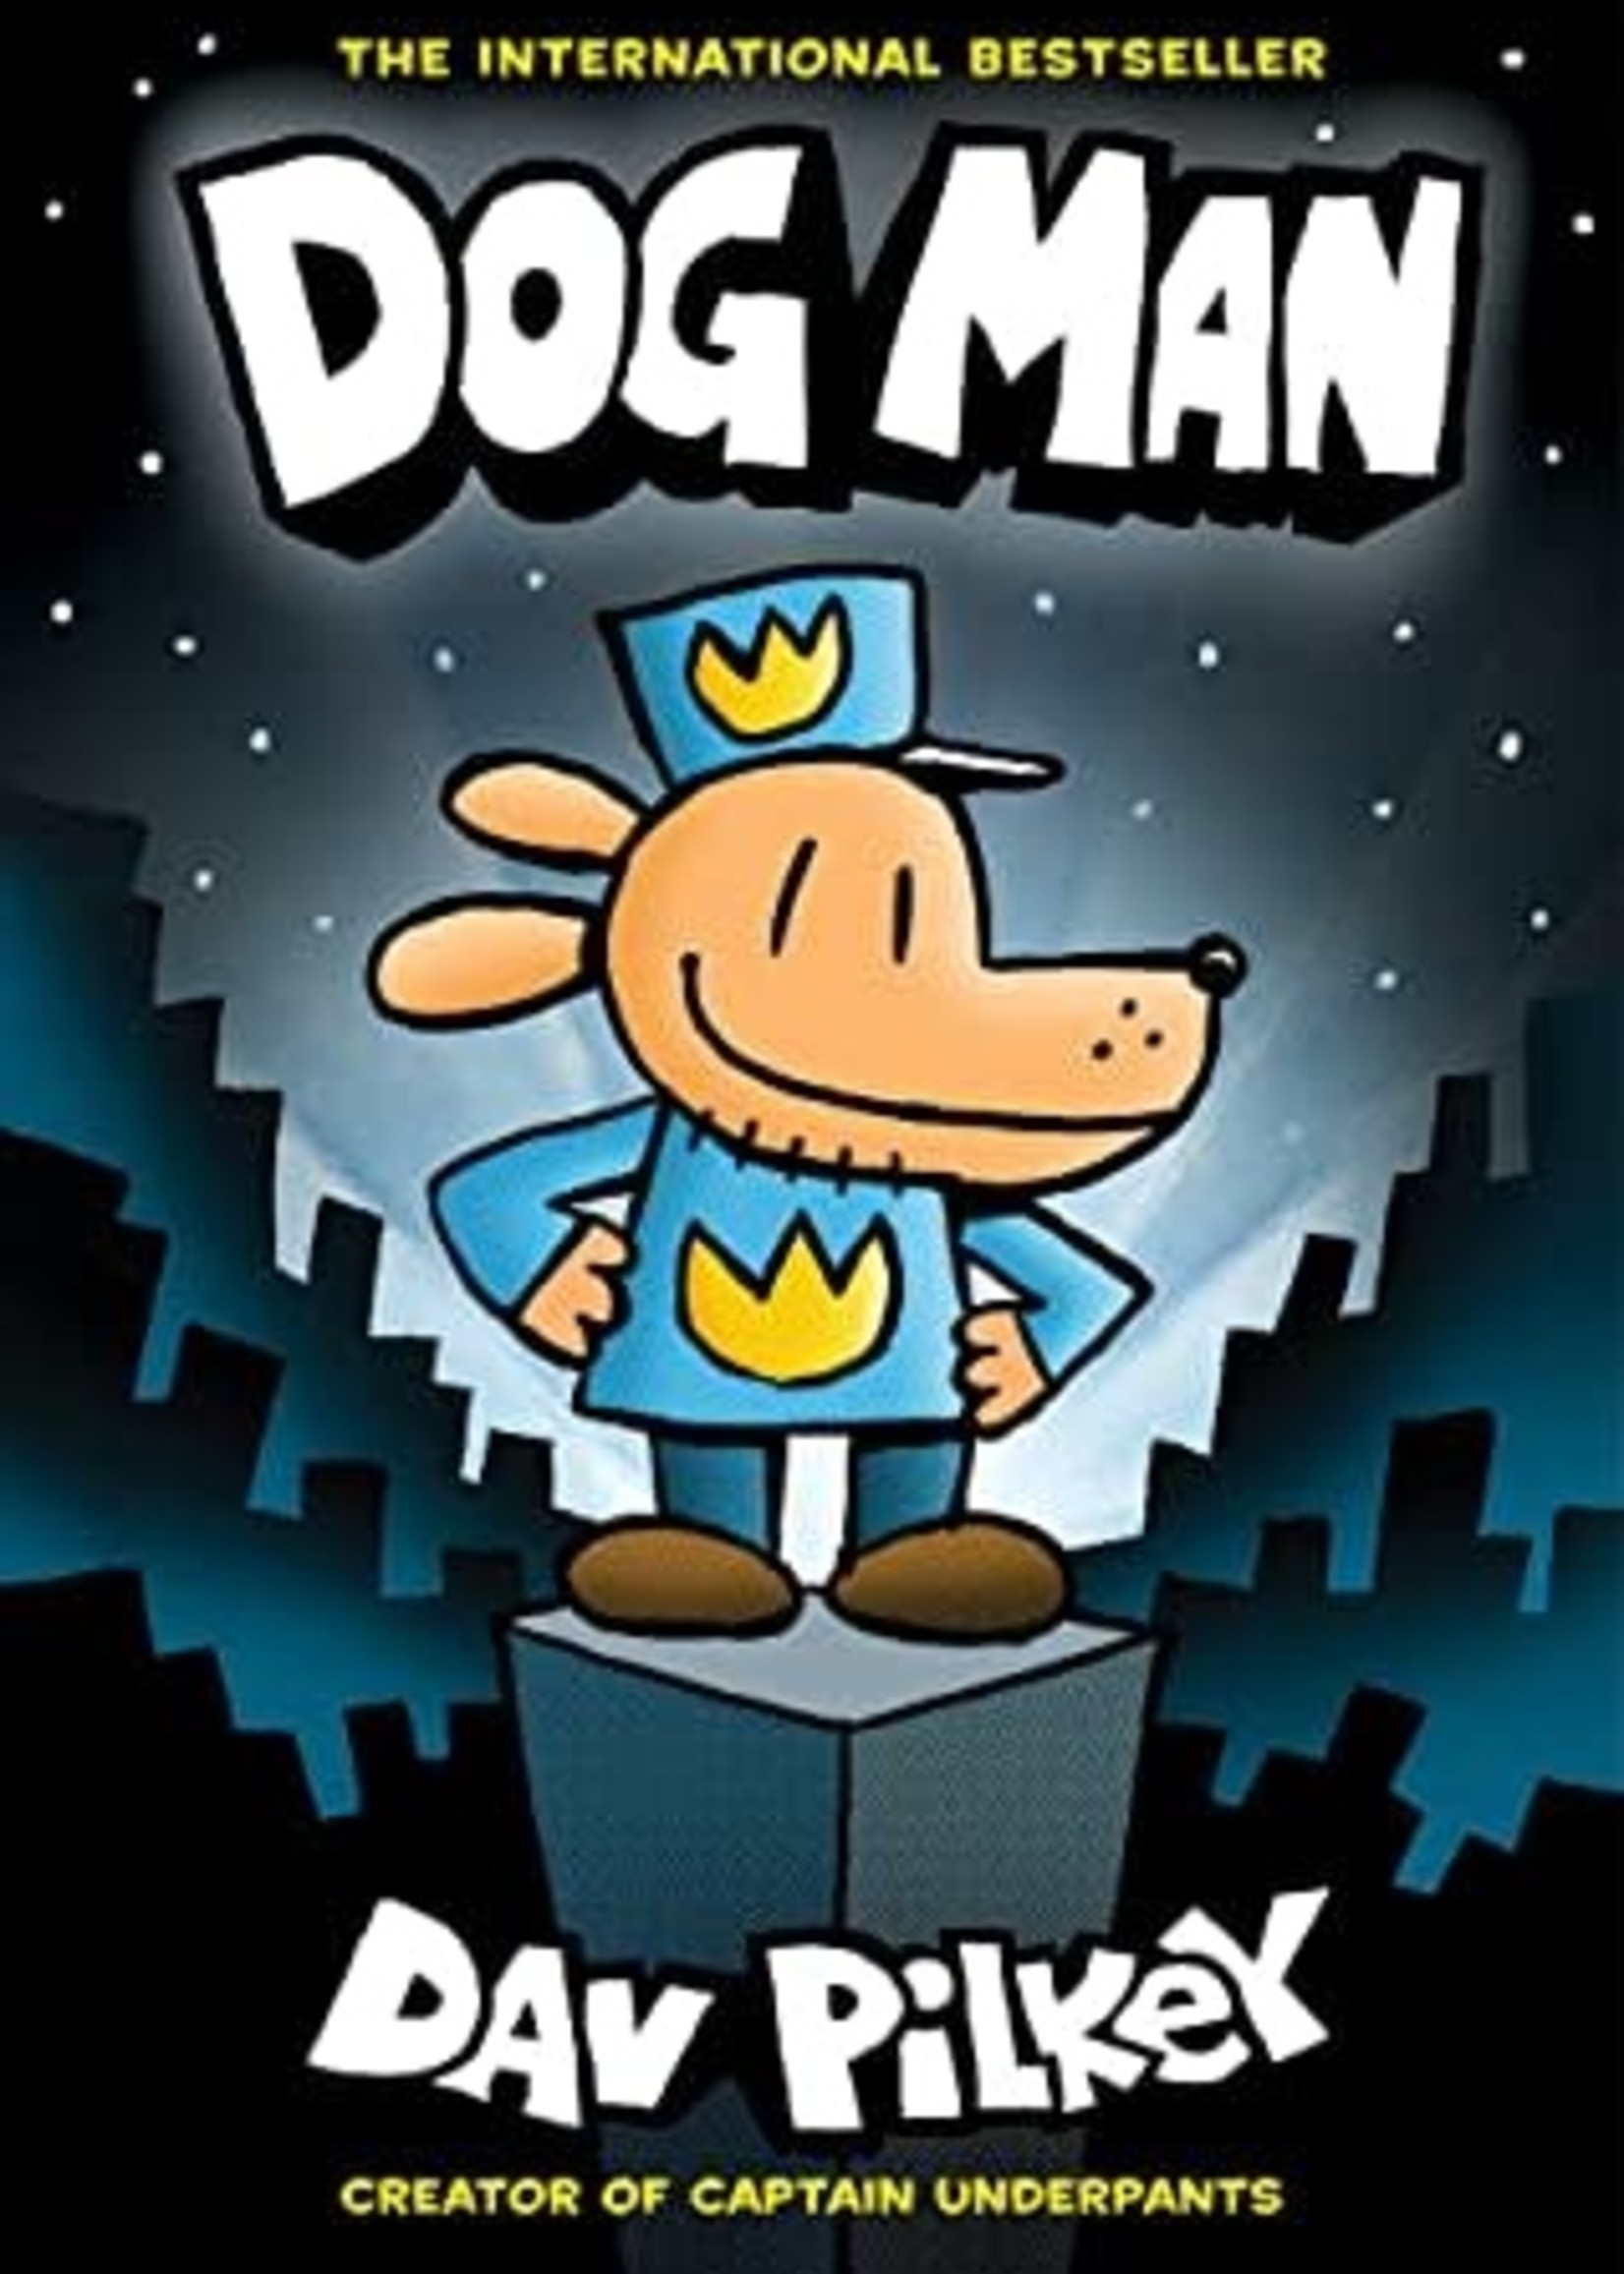 Dog Man (Dog Man #1) by Dav Pilkey